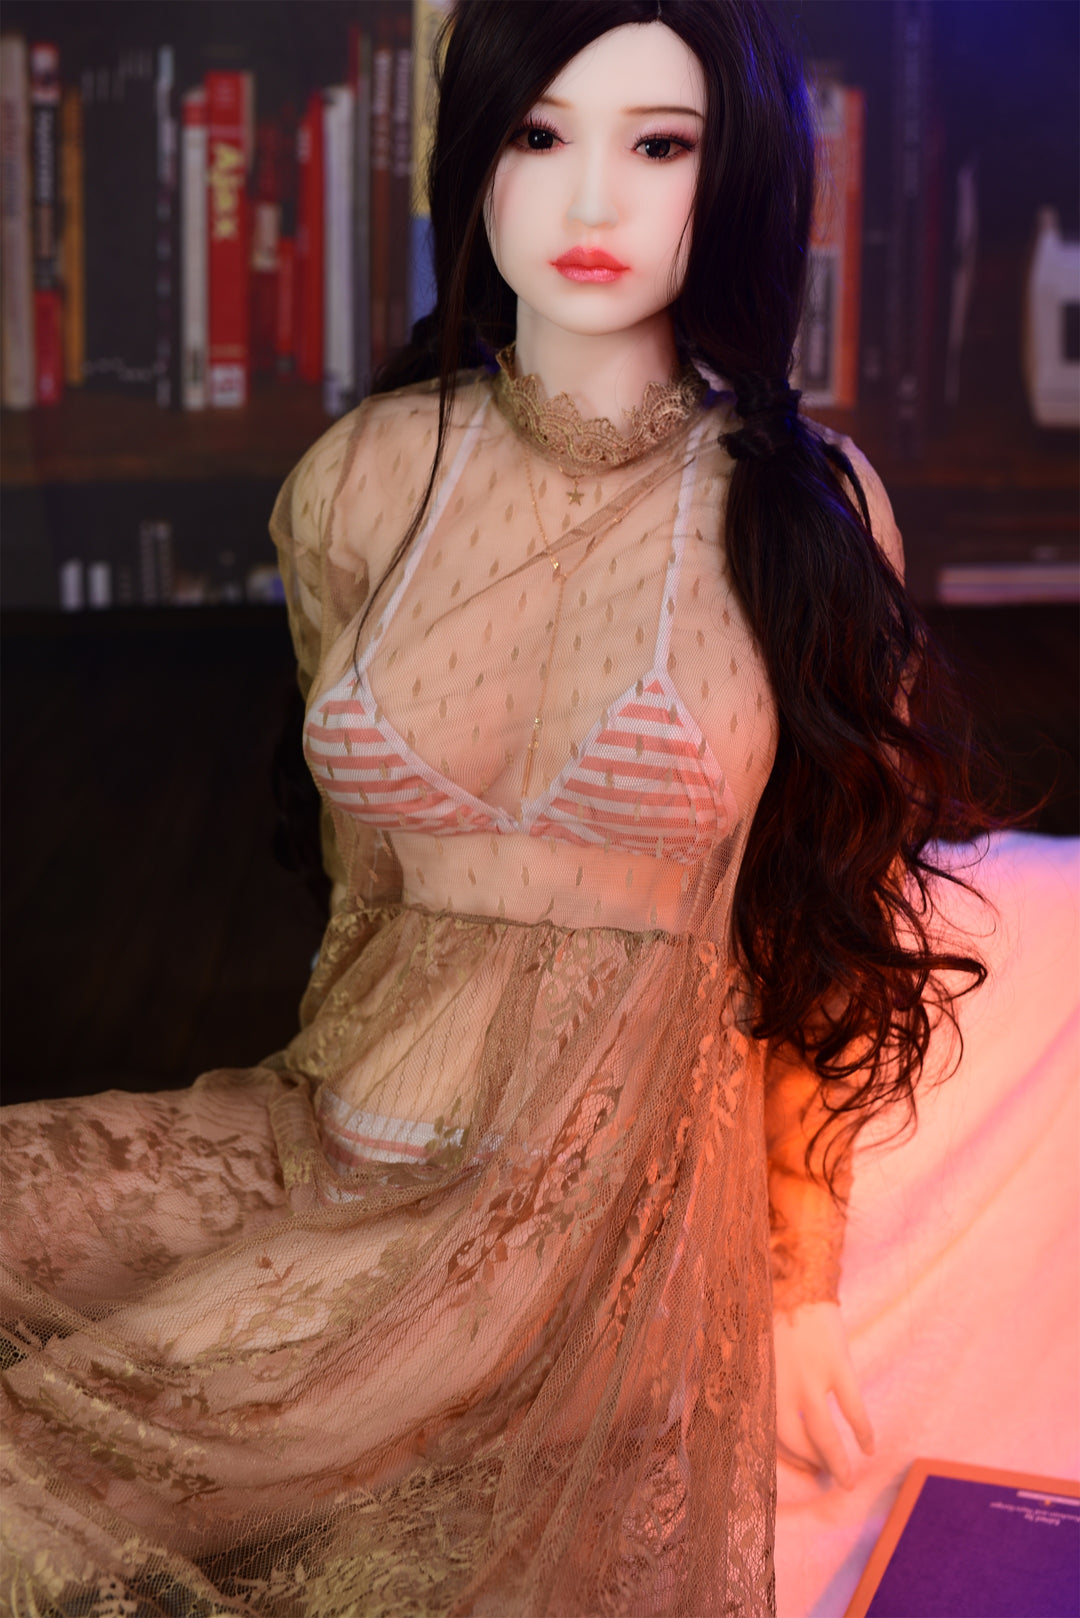 6YE | 5ft3/160cm Mid Boobs Intellectual Asian Sex Doll - Carlyne